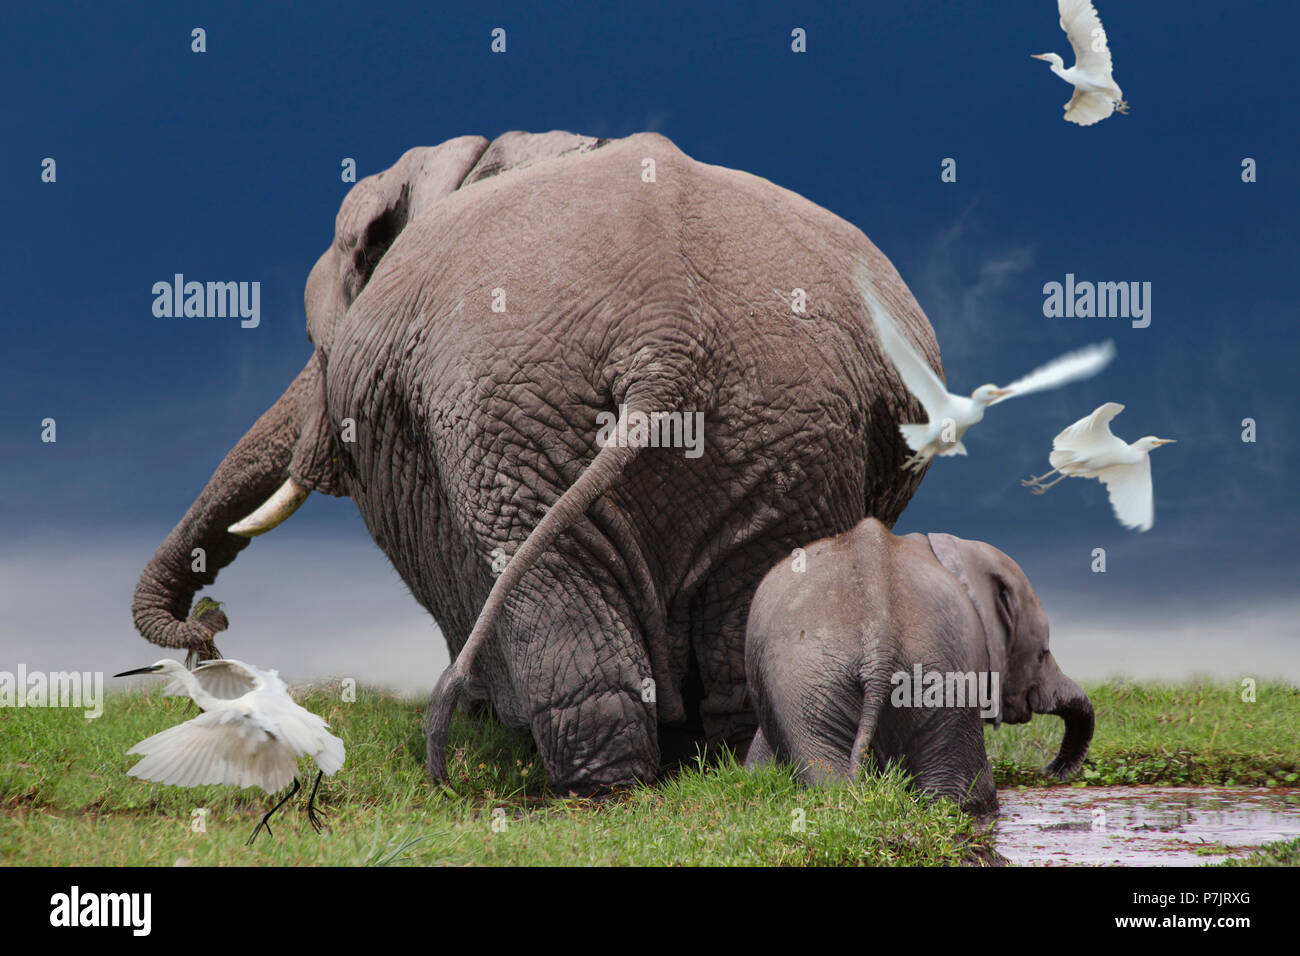 African bush elephants, Loxodonta africana, adult and juvenile, from behind, swampland, Amboseli National Park, Kenya, East Africa Stock Photo